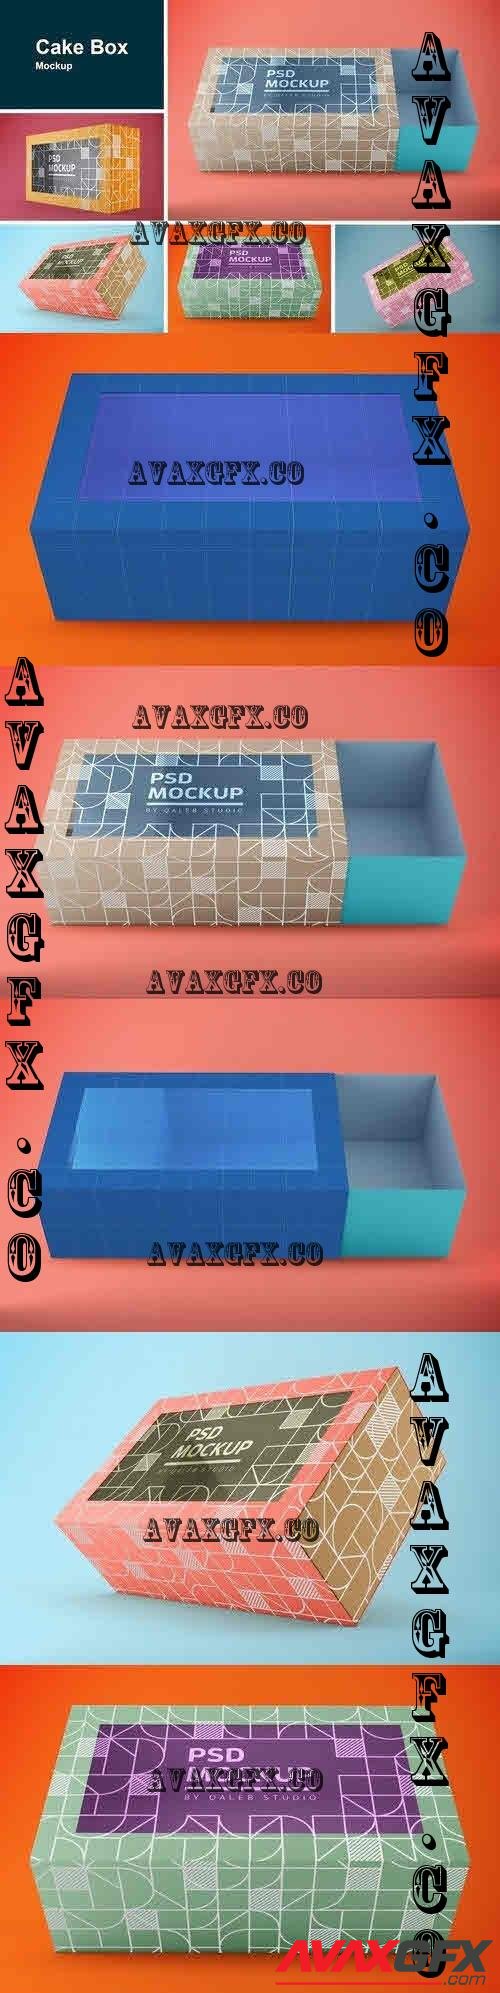 Cake Box Mockup - 10204784